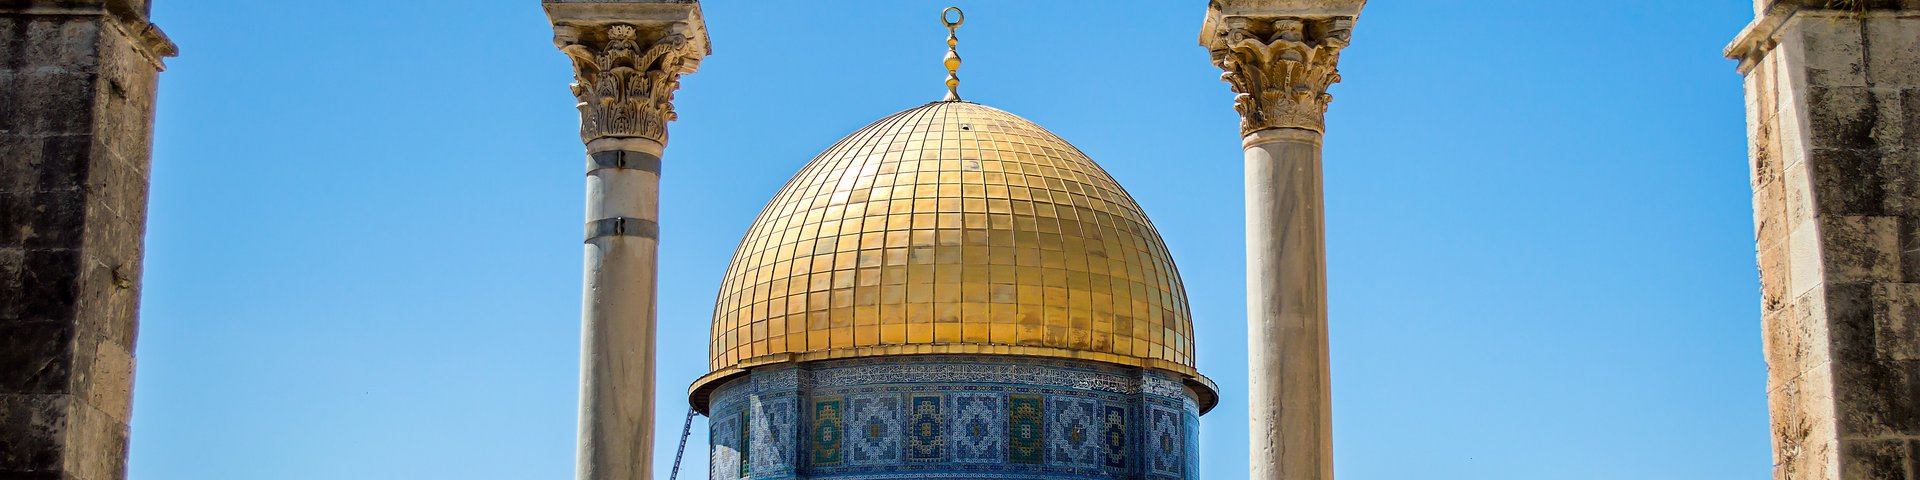 Felsendom mit goldener Kuppel in Jerusalem